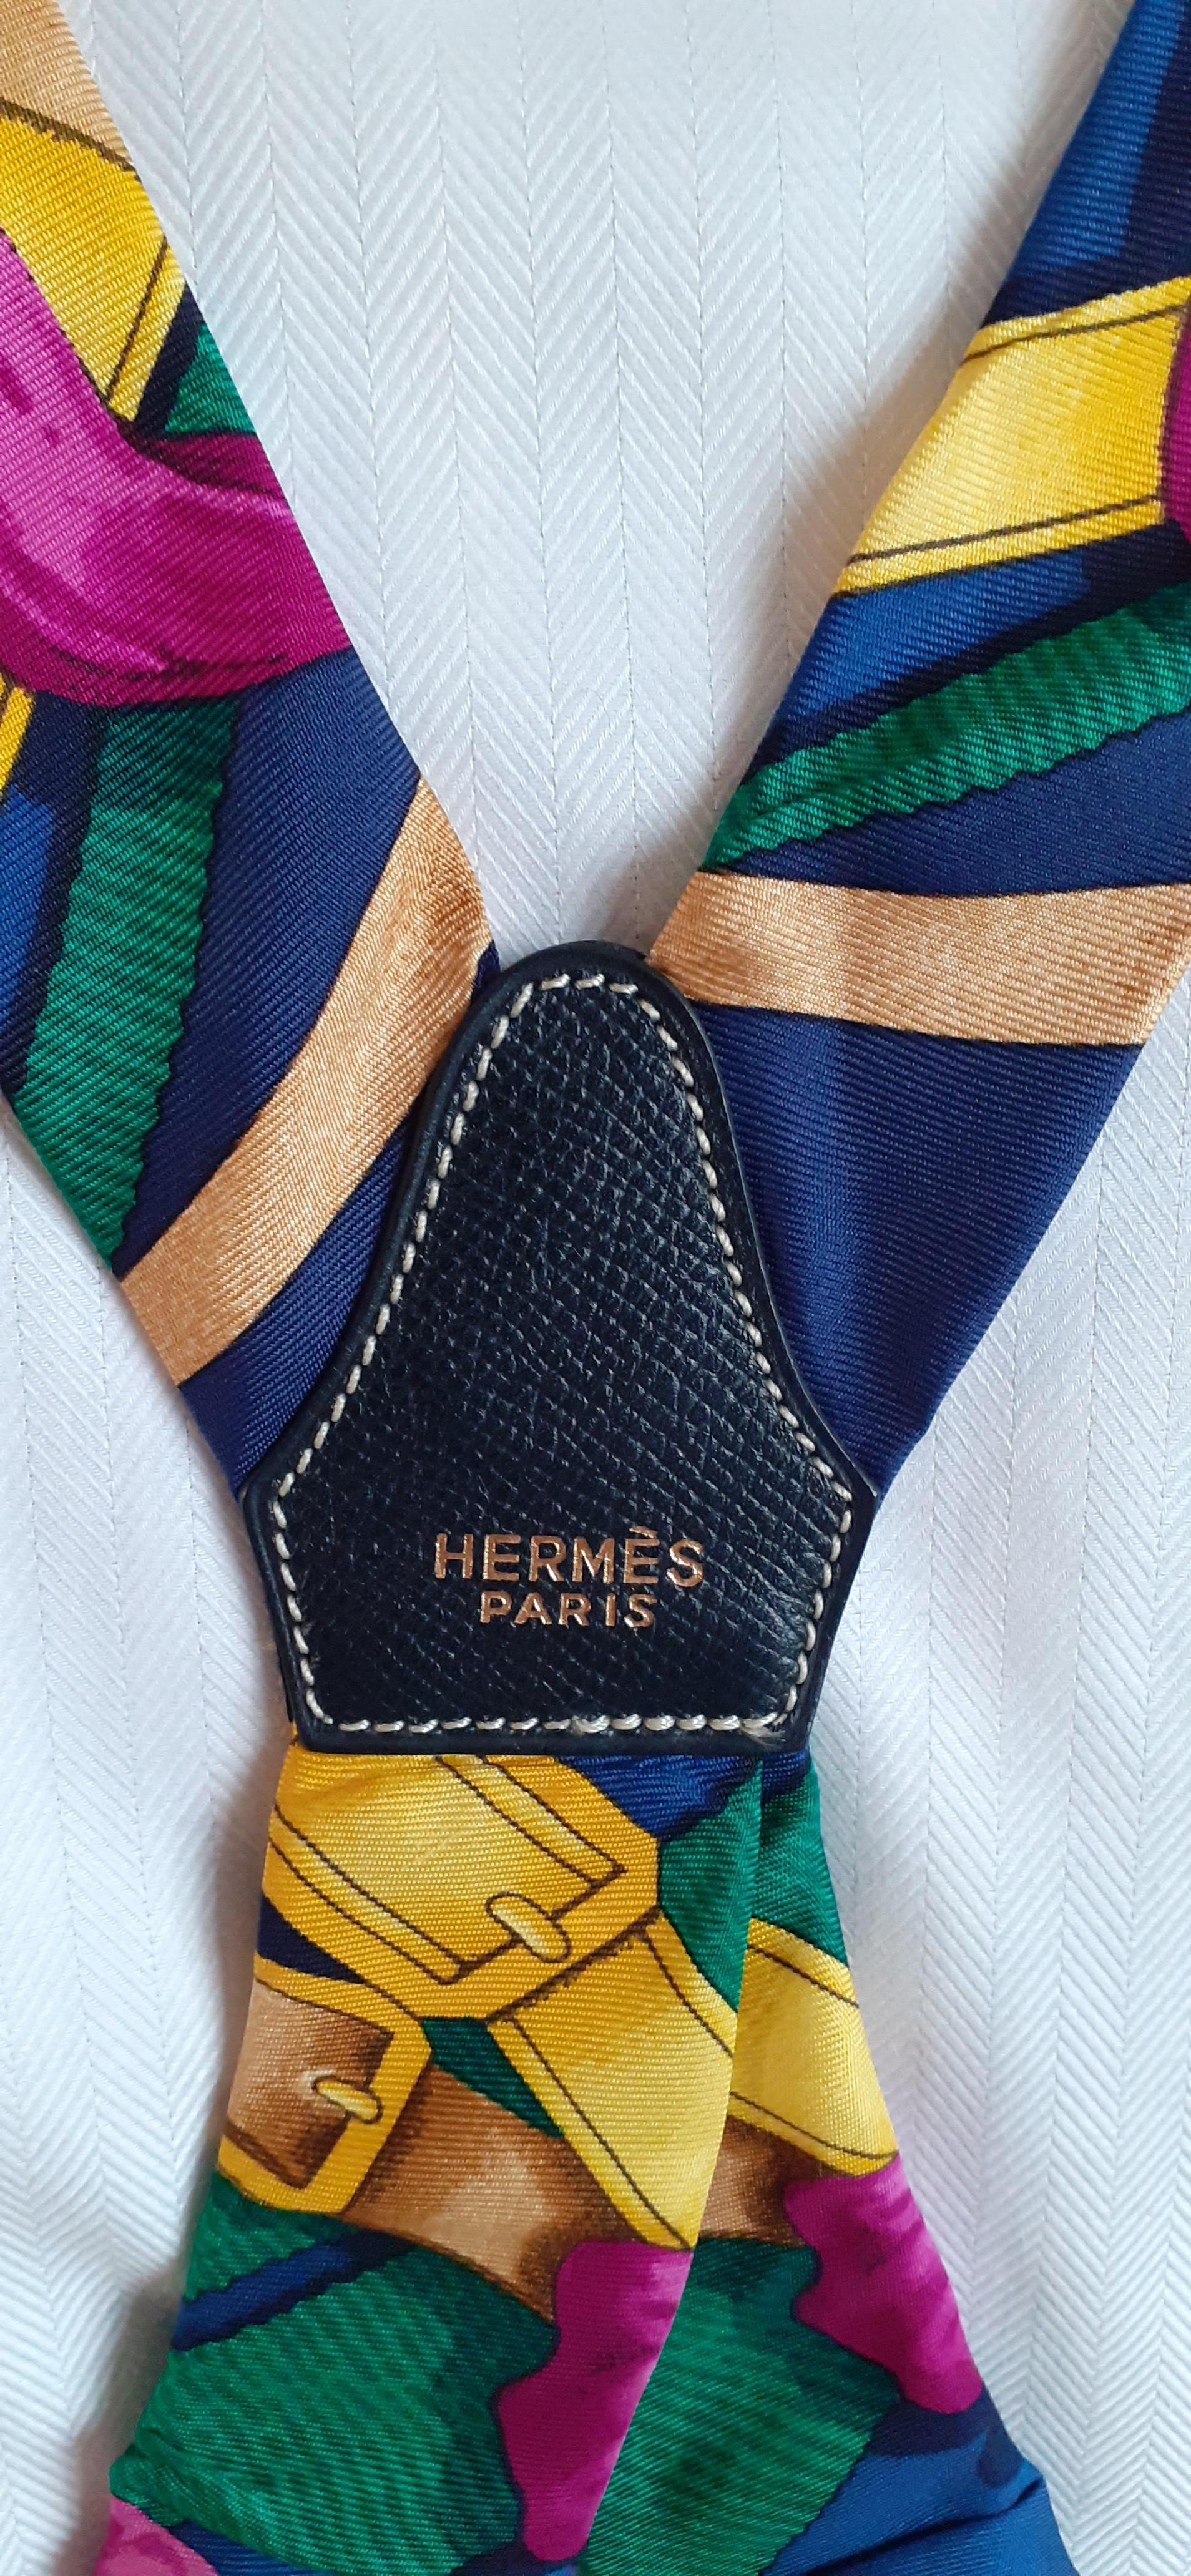 Hermès Vintage Verstellbare Hosenträger Grand Manège Druck in Seide und Leder Selten im Angebot 11